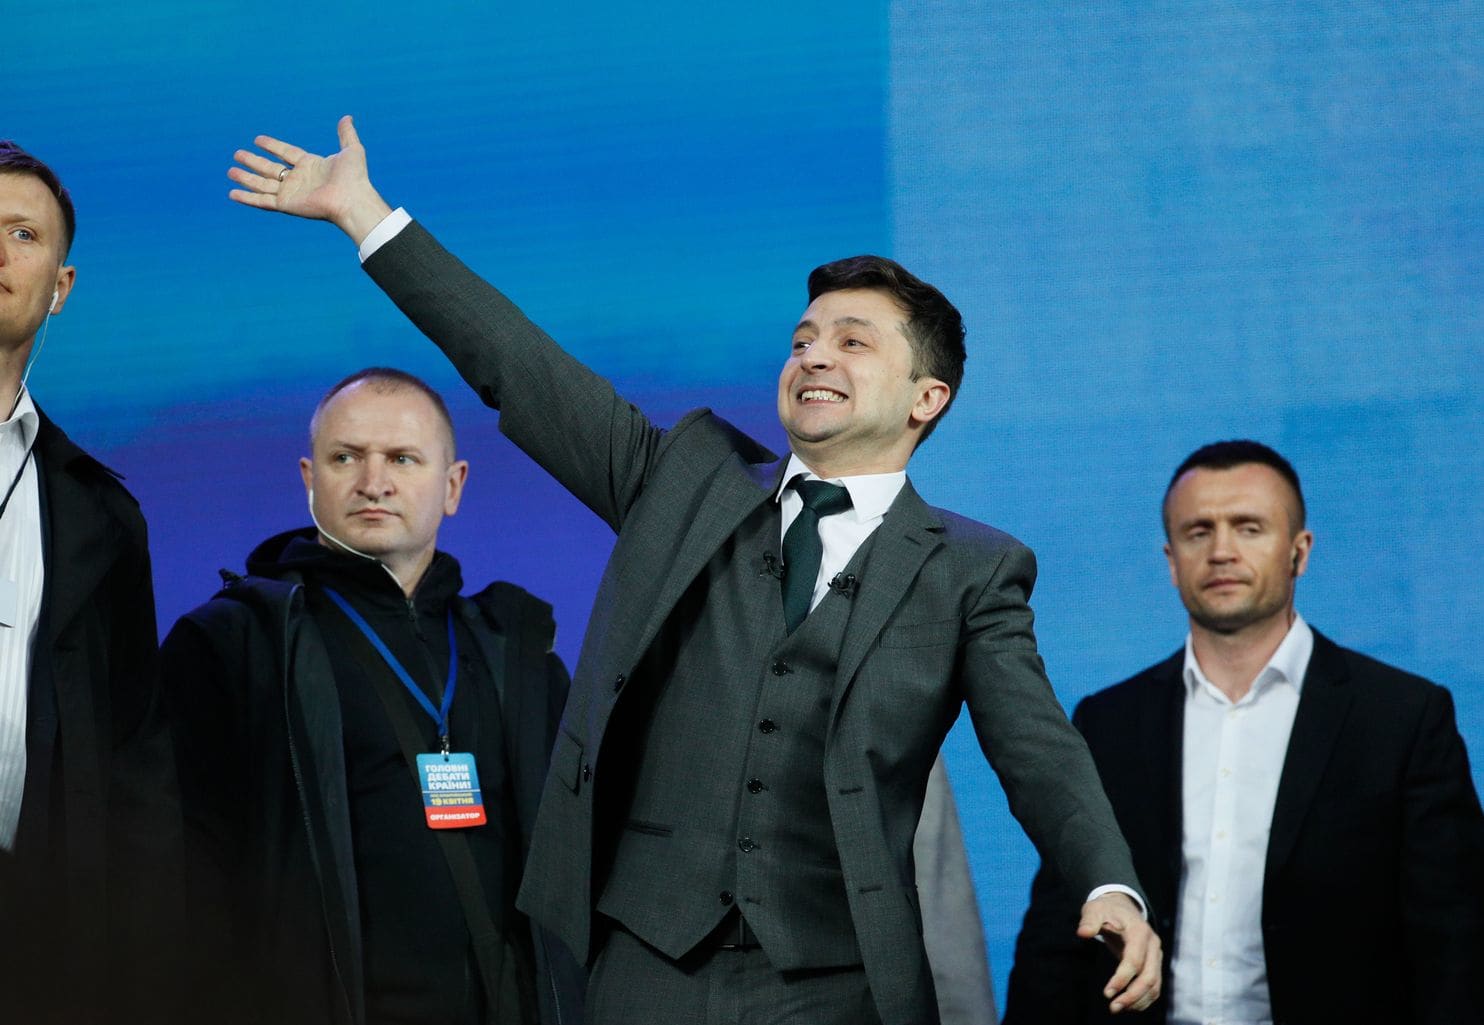 Ukrainian presidential candidate Volodymyr Zelensky reacts during a debate with incumbent Petro Poroshenko at the Olimpiyskiy Stadium in Kiev on April 19.